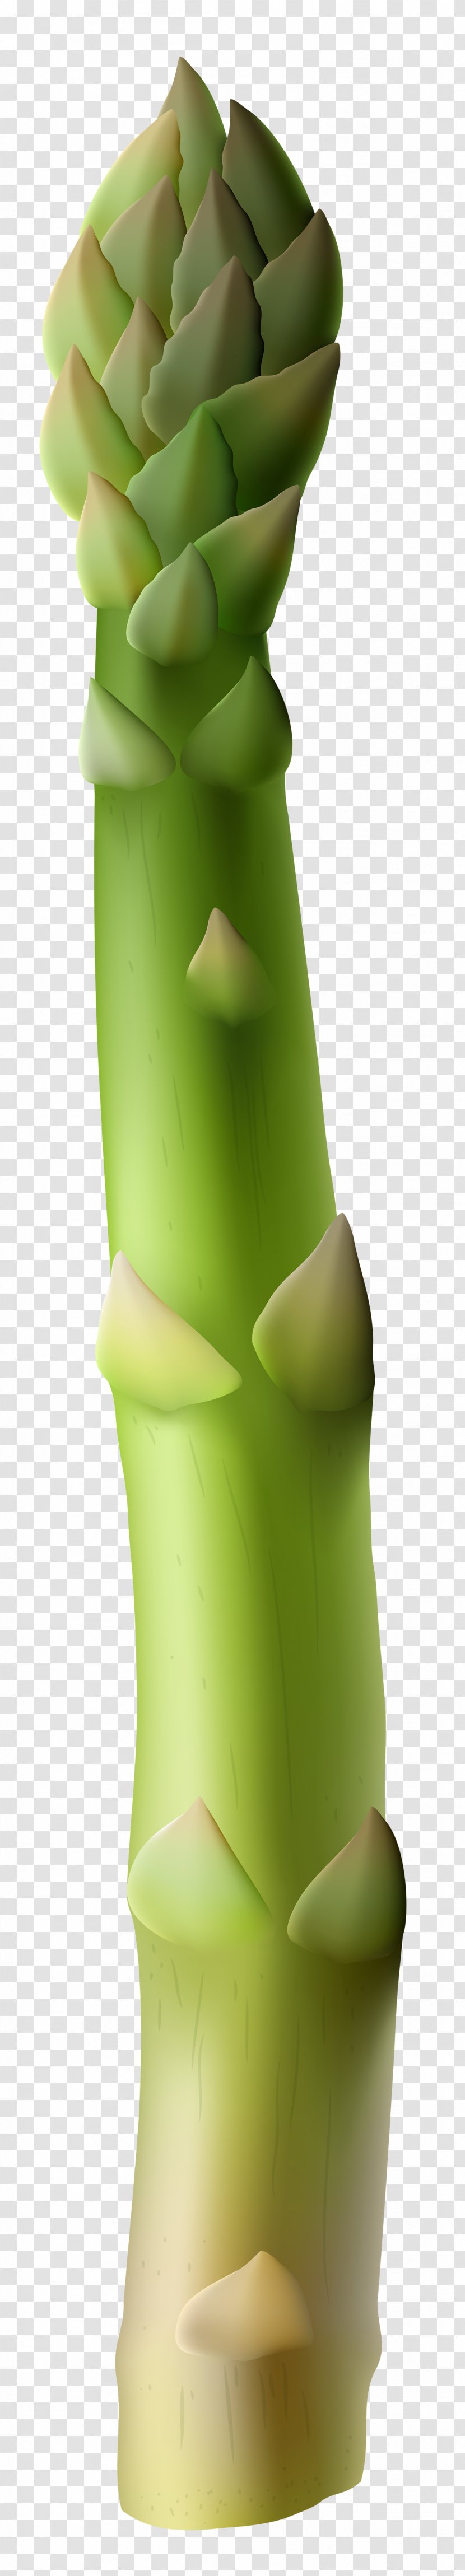 Vase Design Product - Iphone - Asparagus Clip Art Image Transparent PNG